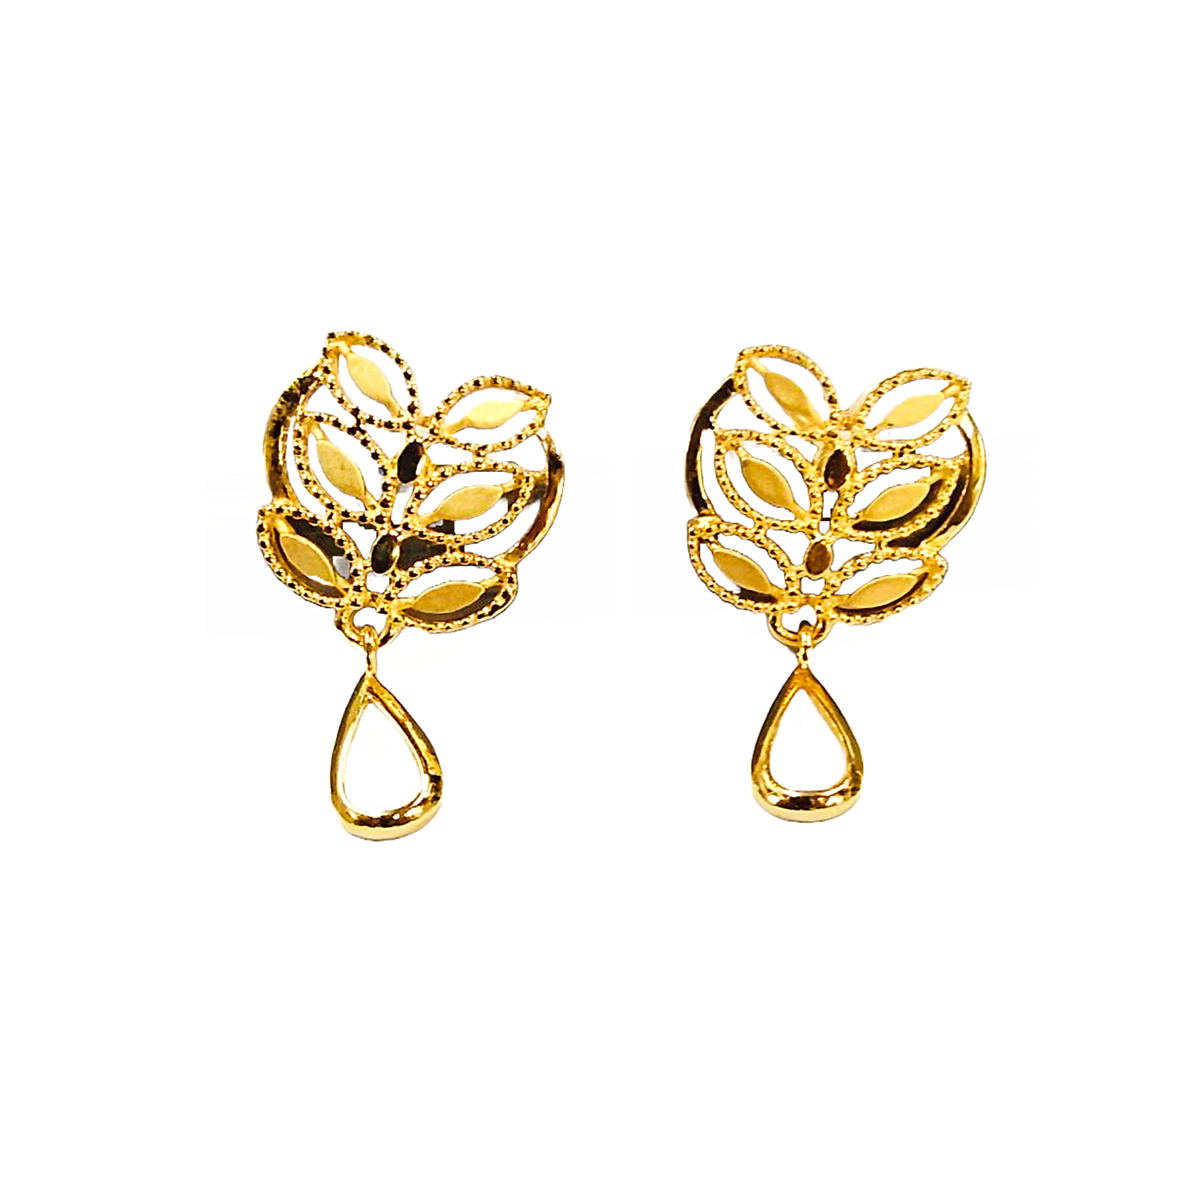 Prisha gold earrings